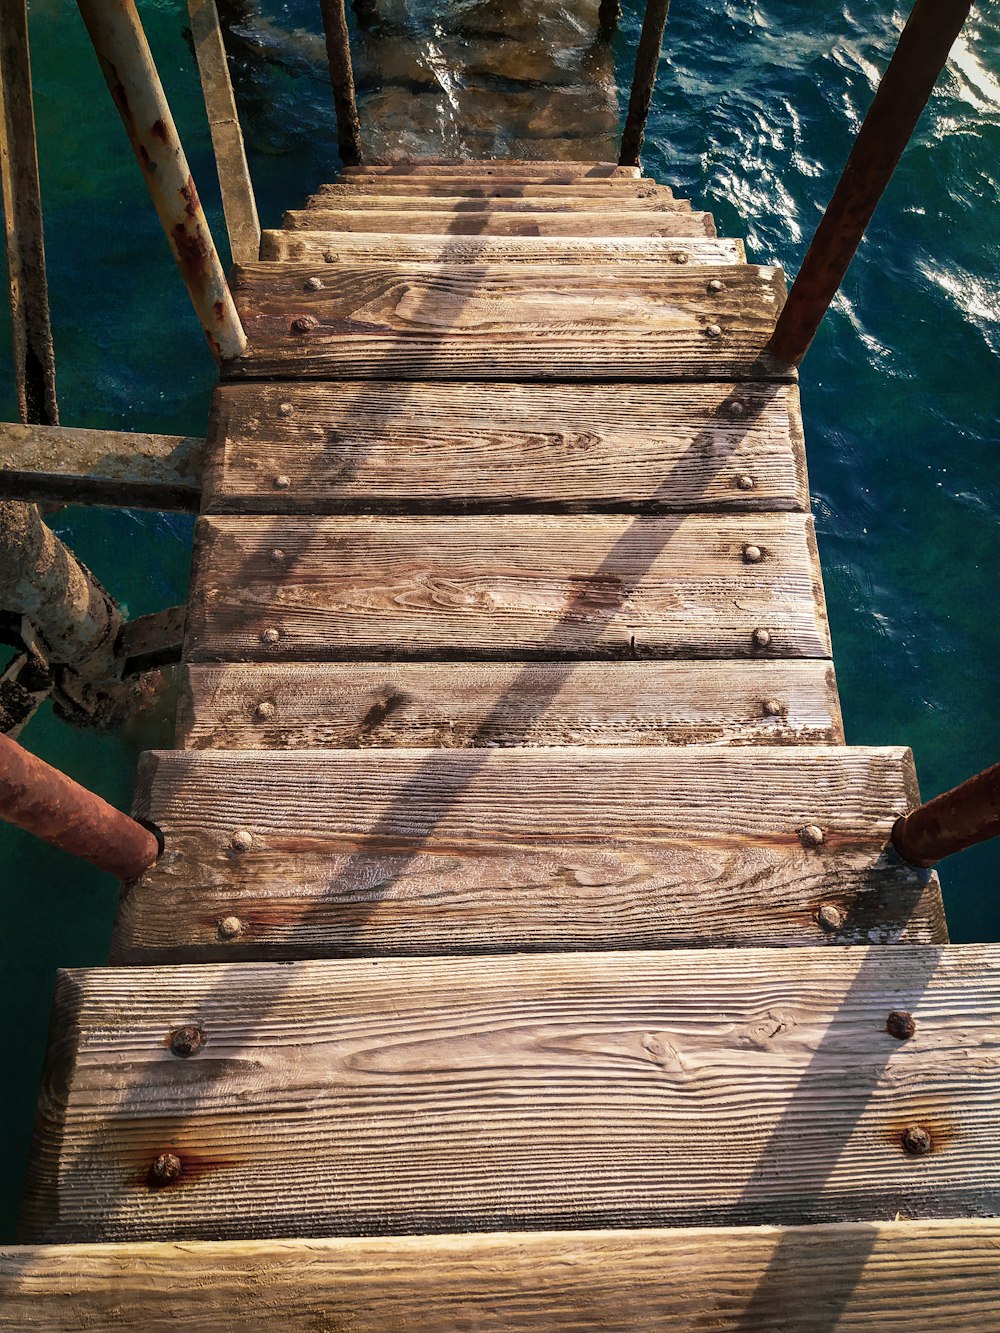 brown wooden dock over blue water